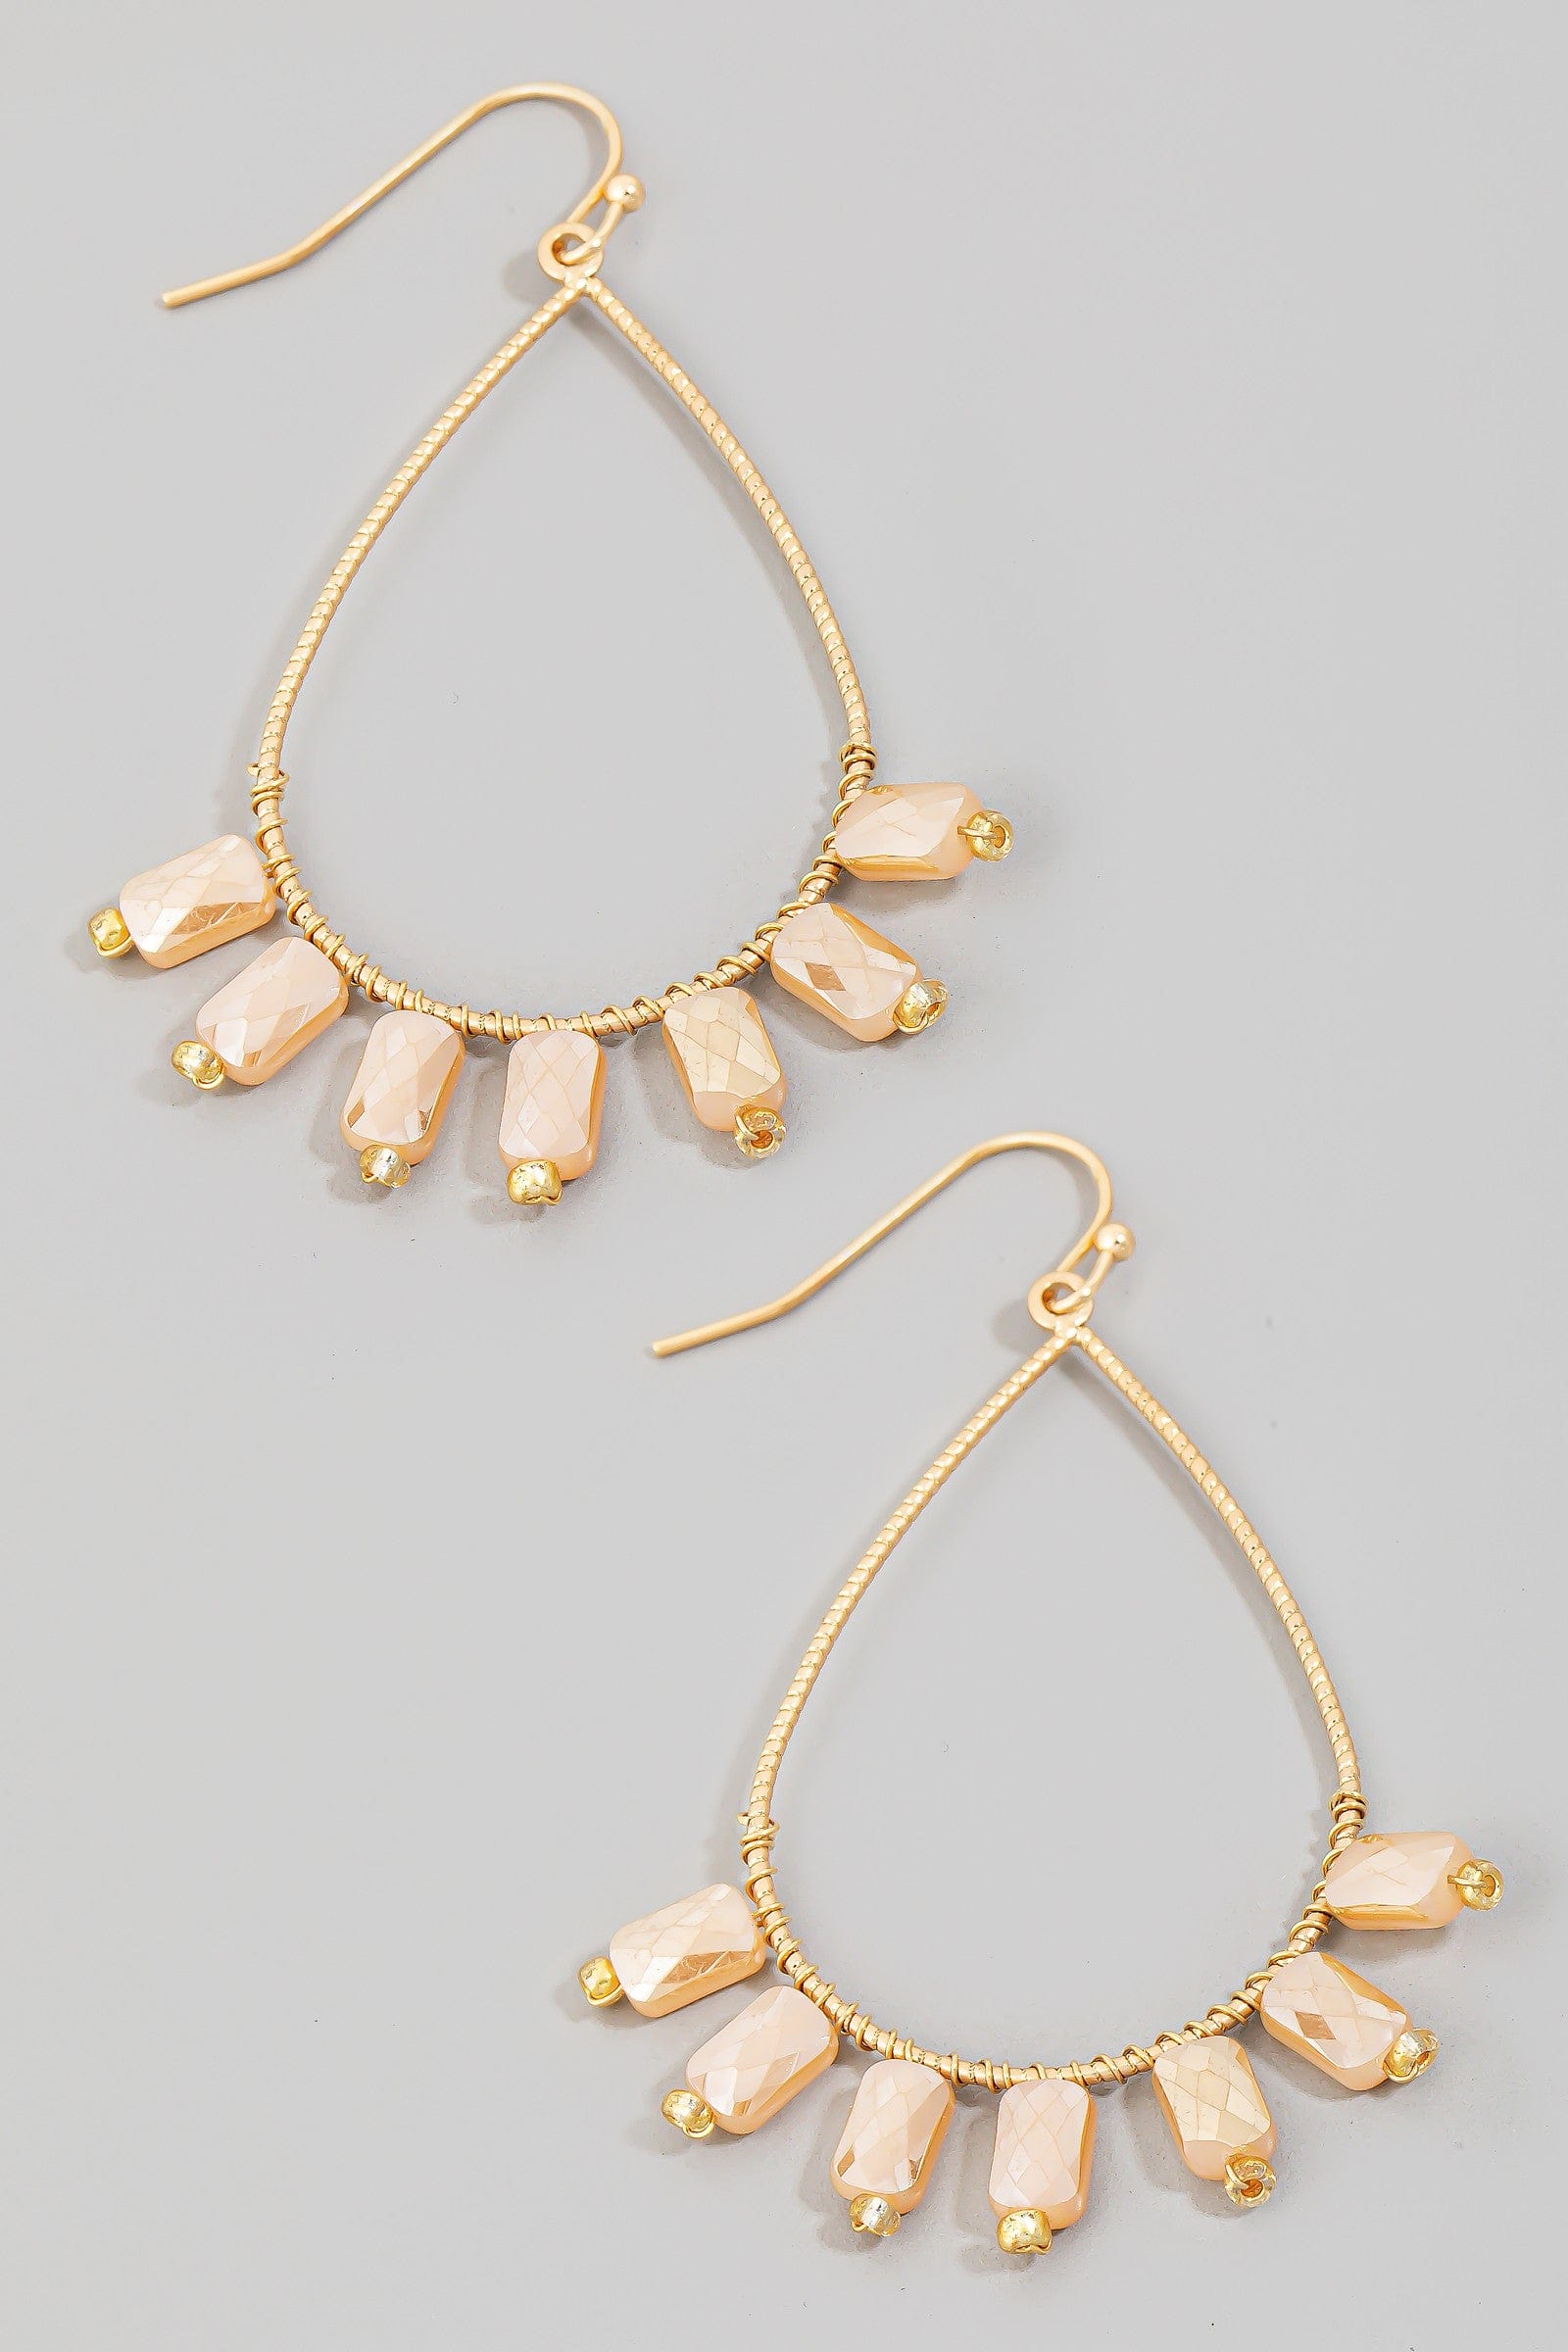 fame accessories Jewelry - Earrings Rhinestone Beaded Tear Dangle Earring In Taupe